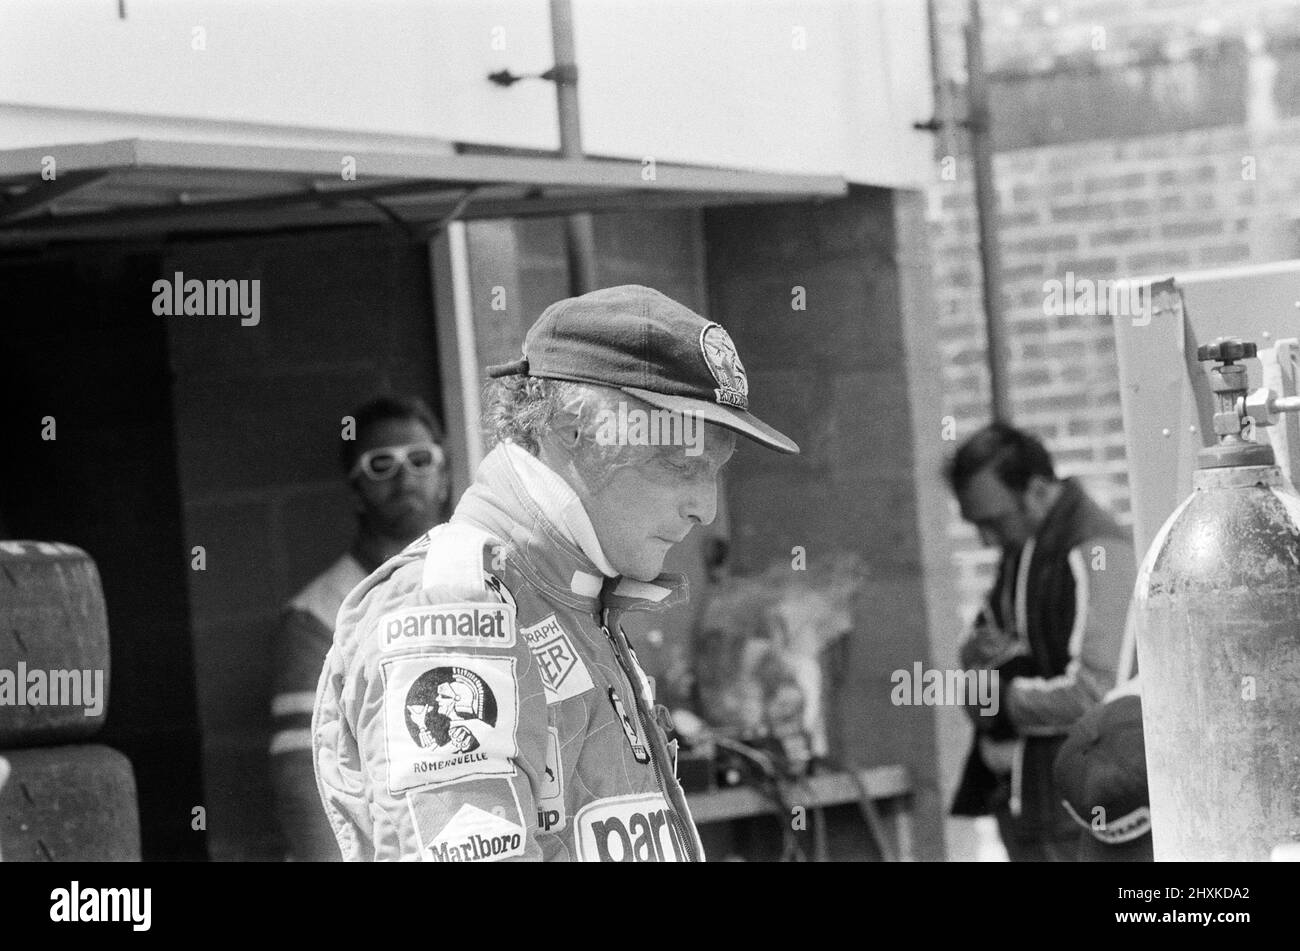 Niki lauda crash Black and White Stock Photos & Images - Alamy